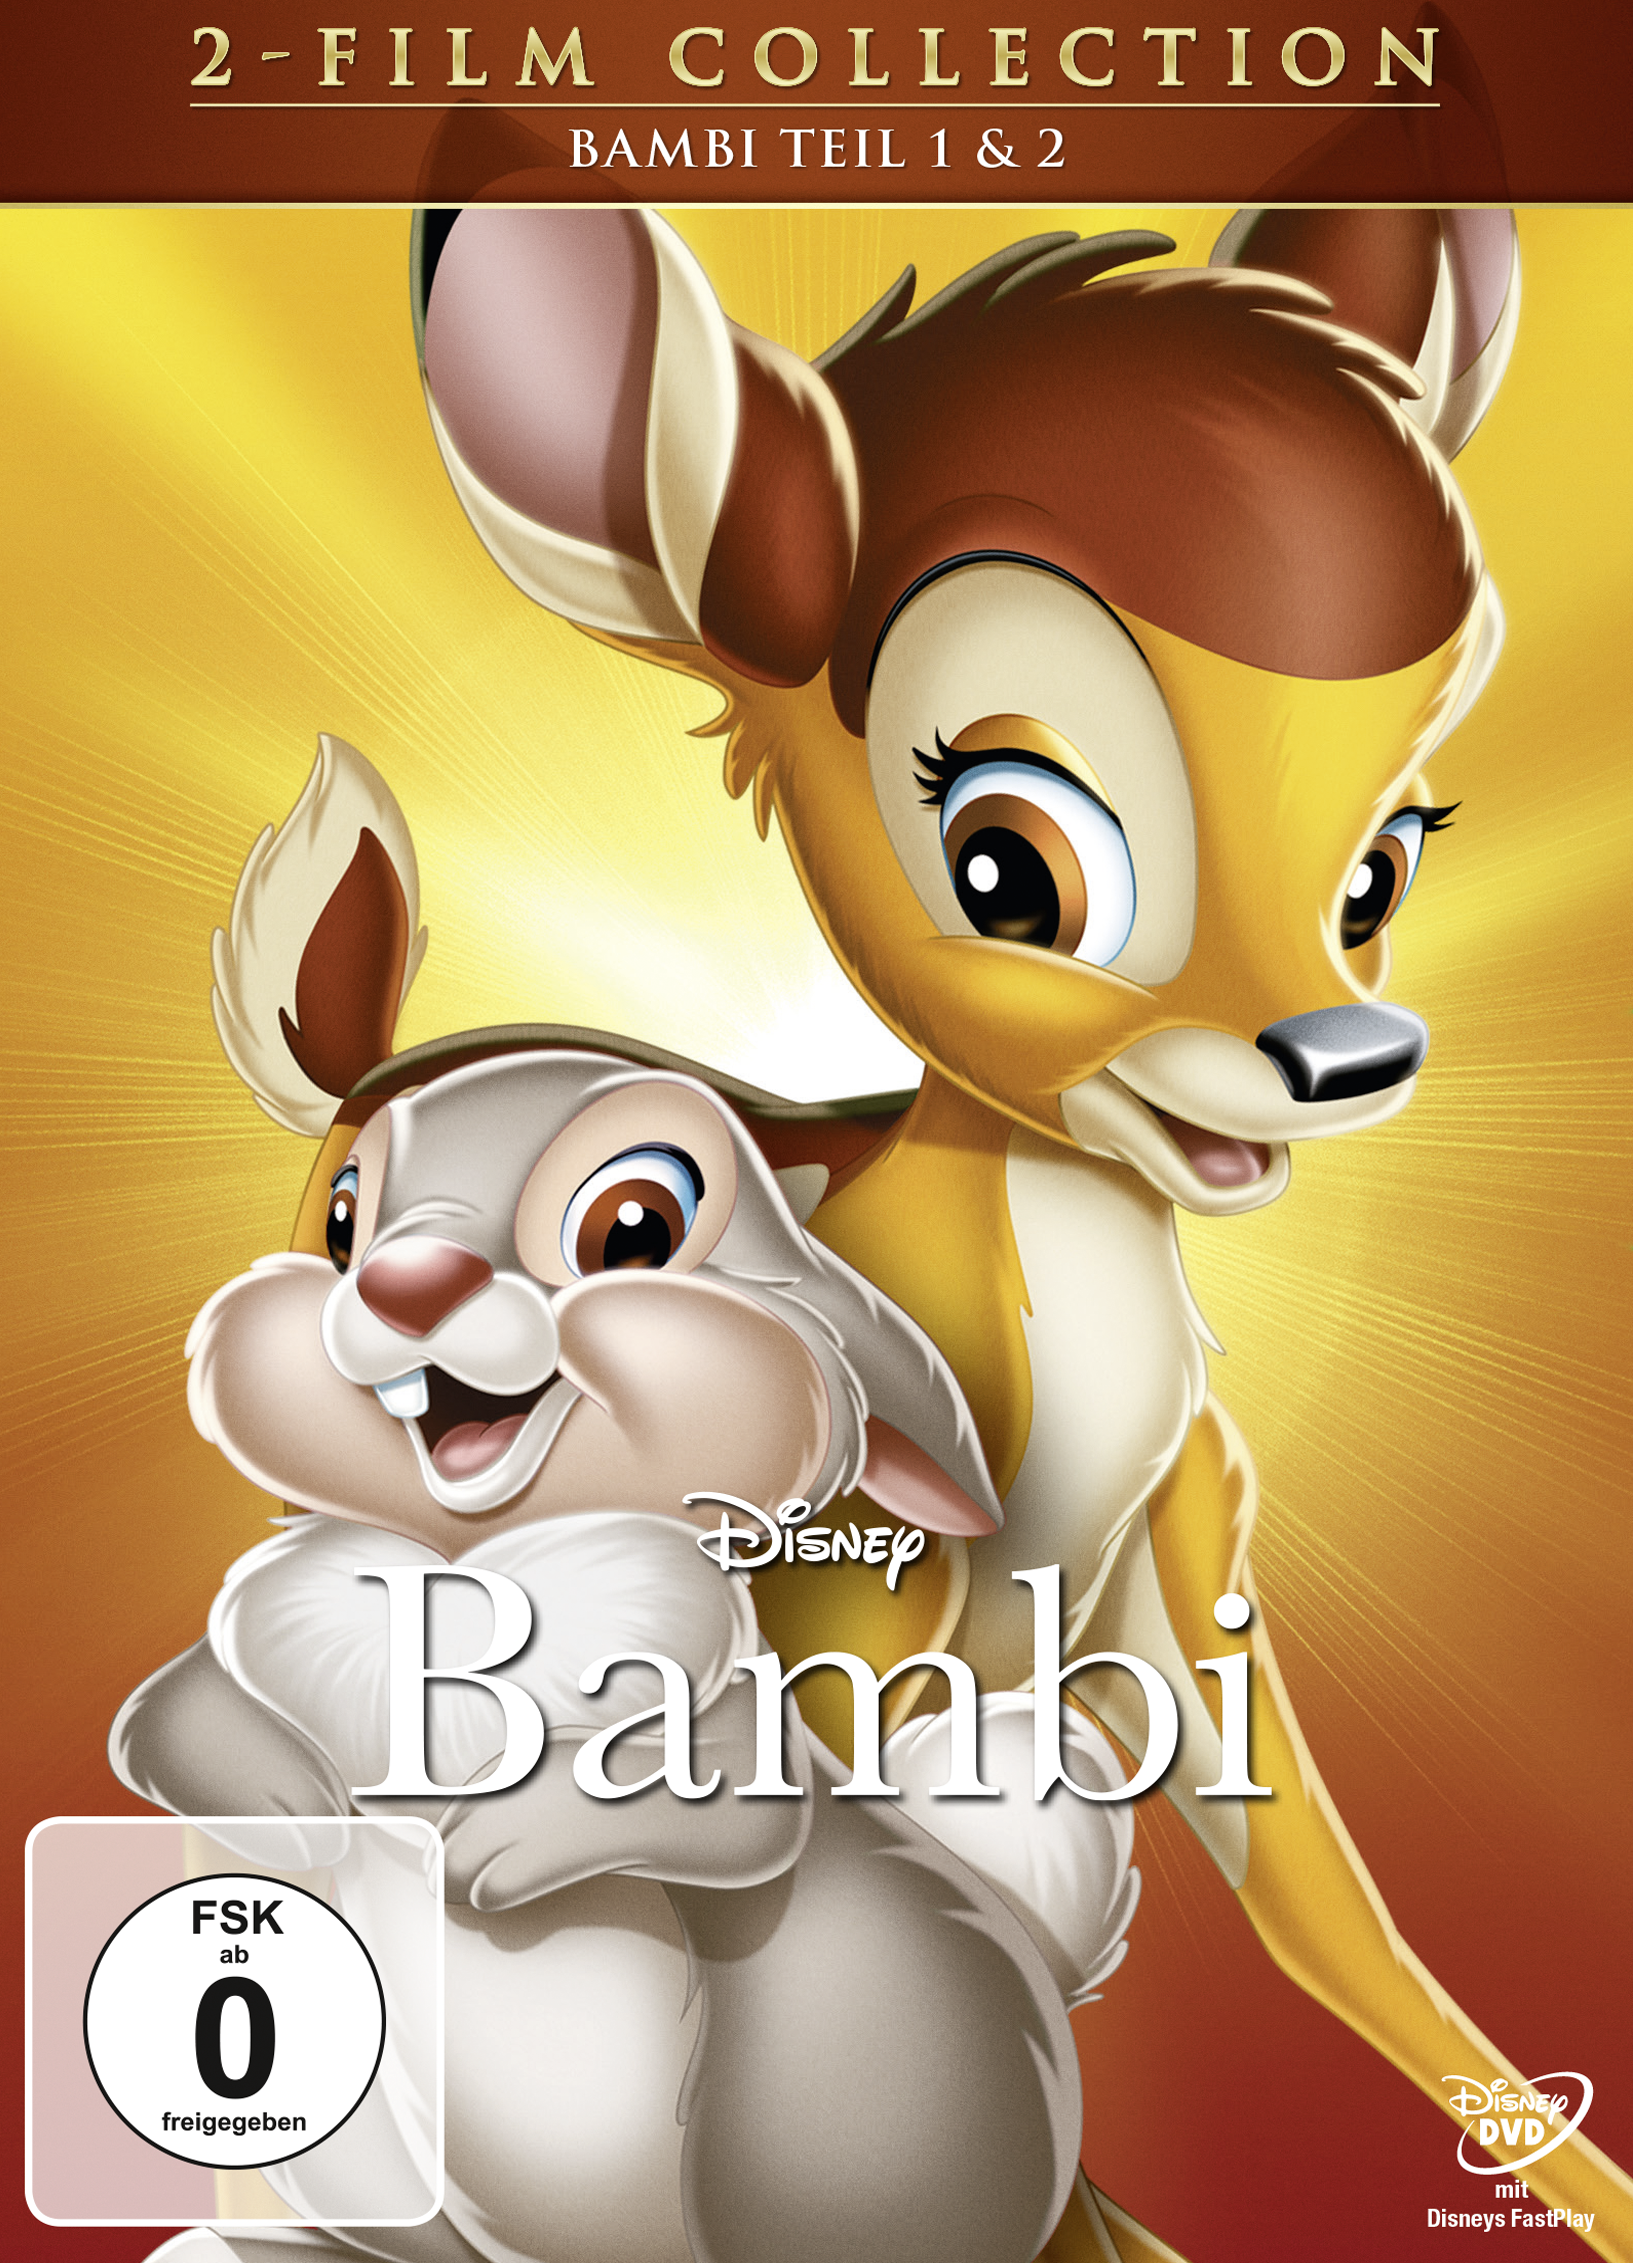 Bambi 1 & DVD 2